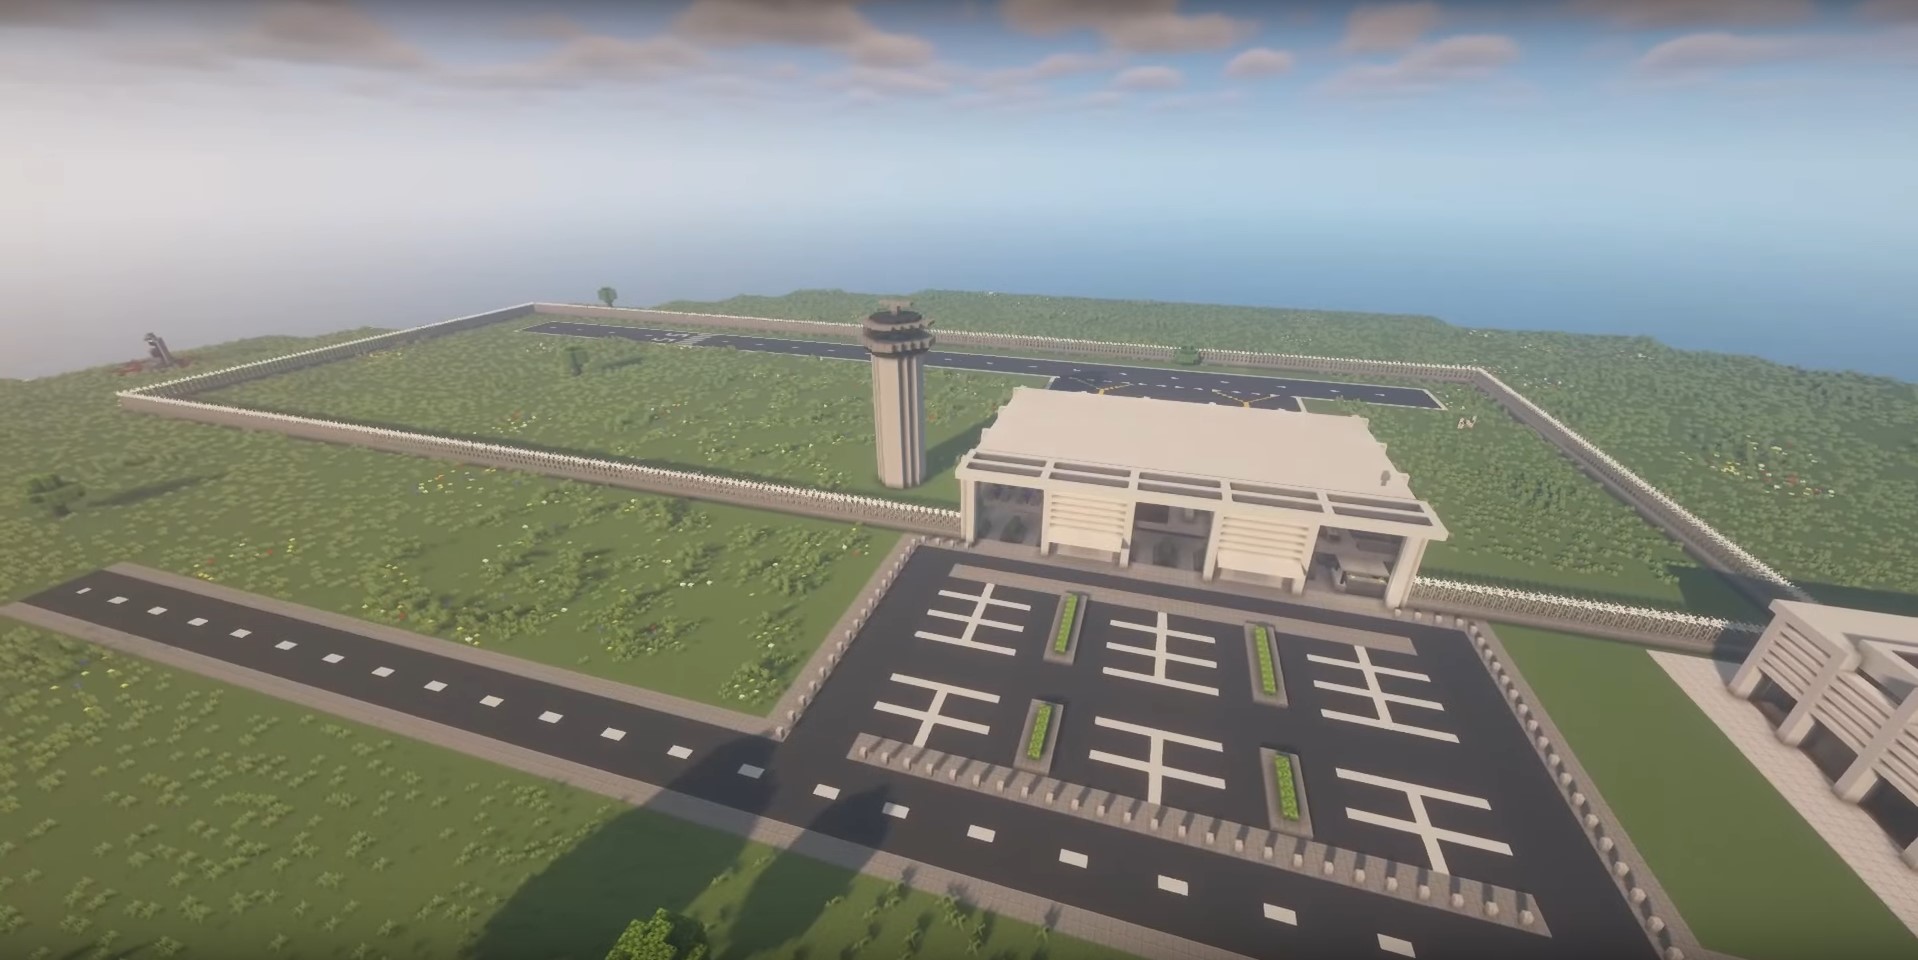 Airport minecraft building idea